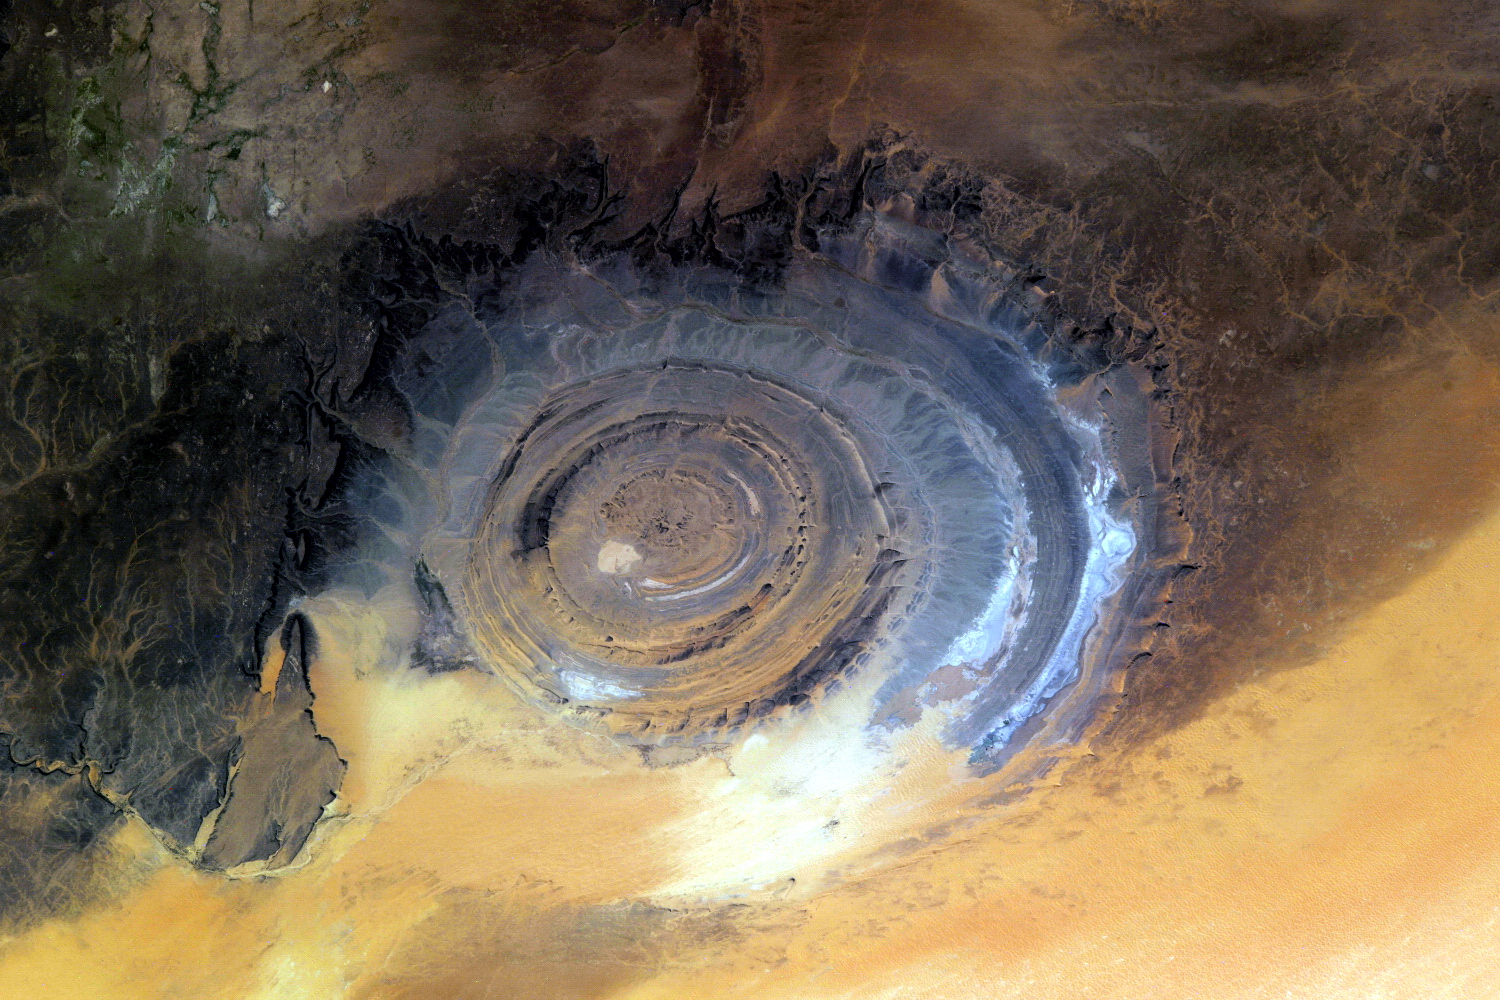 Где вещи на земле. Структура ришат глаз Сахары. Ришат Мавритания. Ришат (глаз Сахары). Мавритания. Ришат Мавритания око земли.